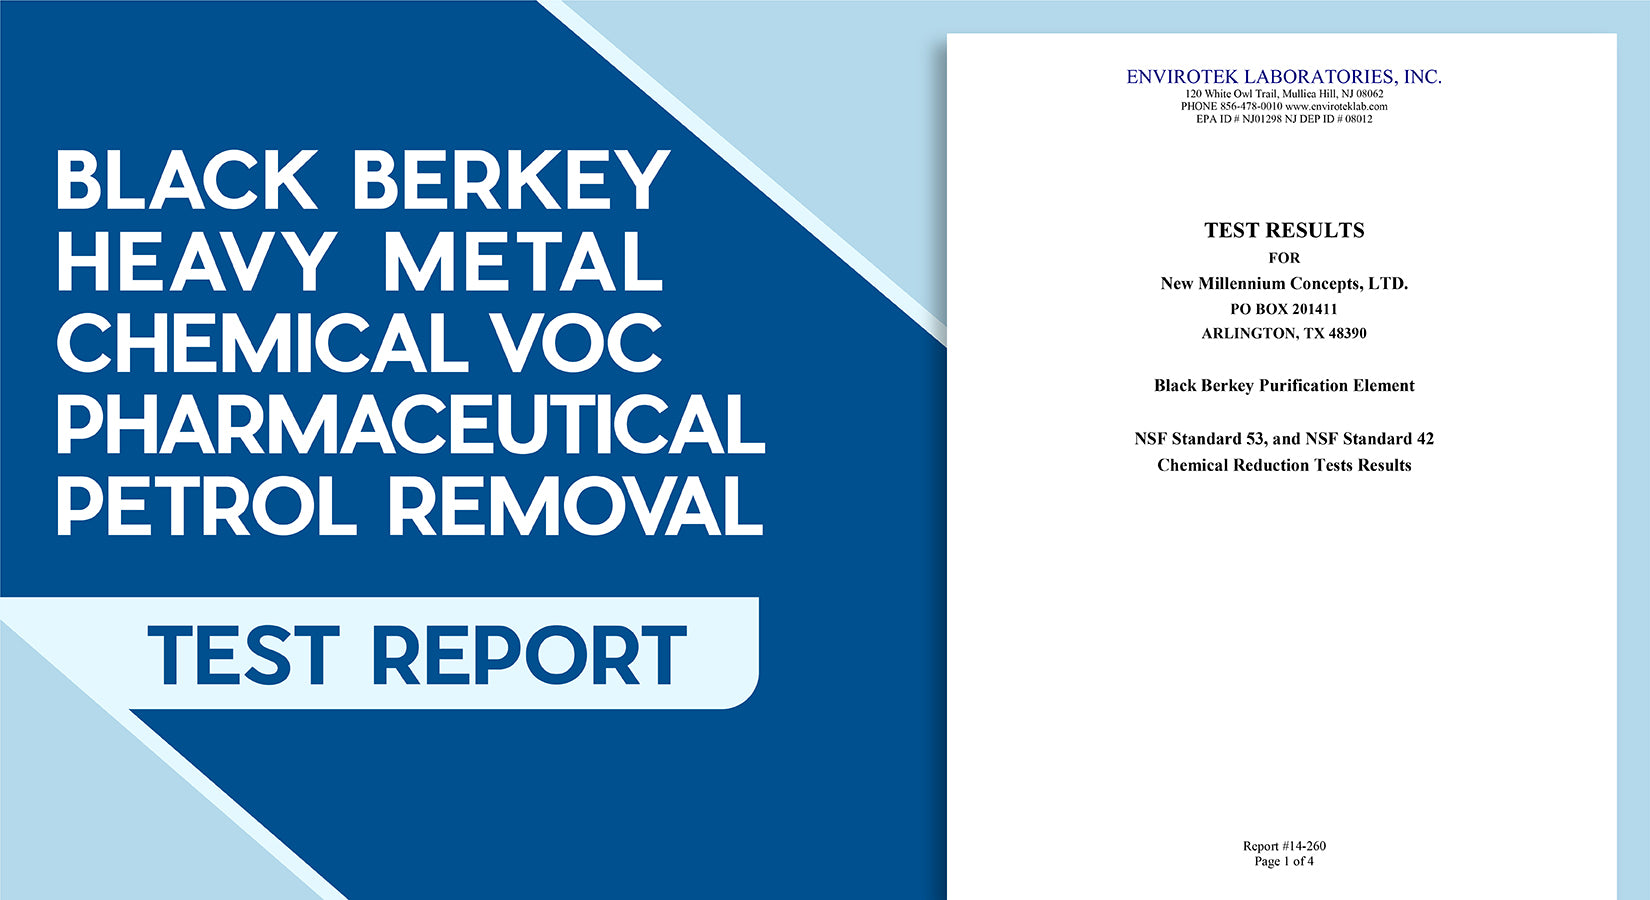 Black Berkey Heavy Metal Chemical VOC Pharmaceutical Petrol Removal Test Report